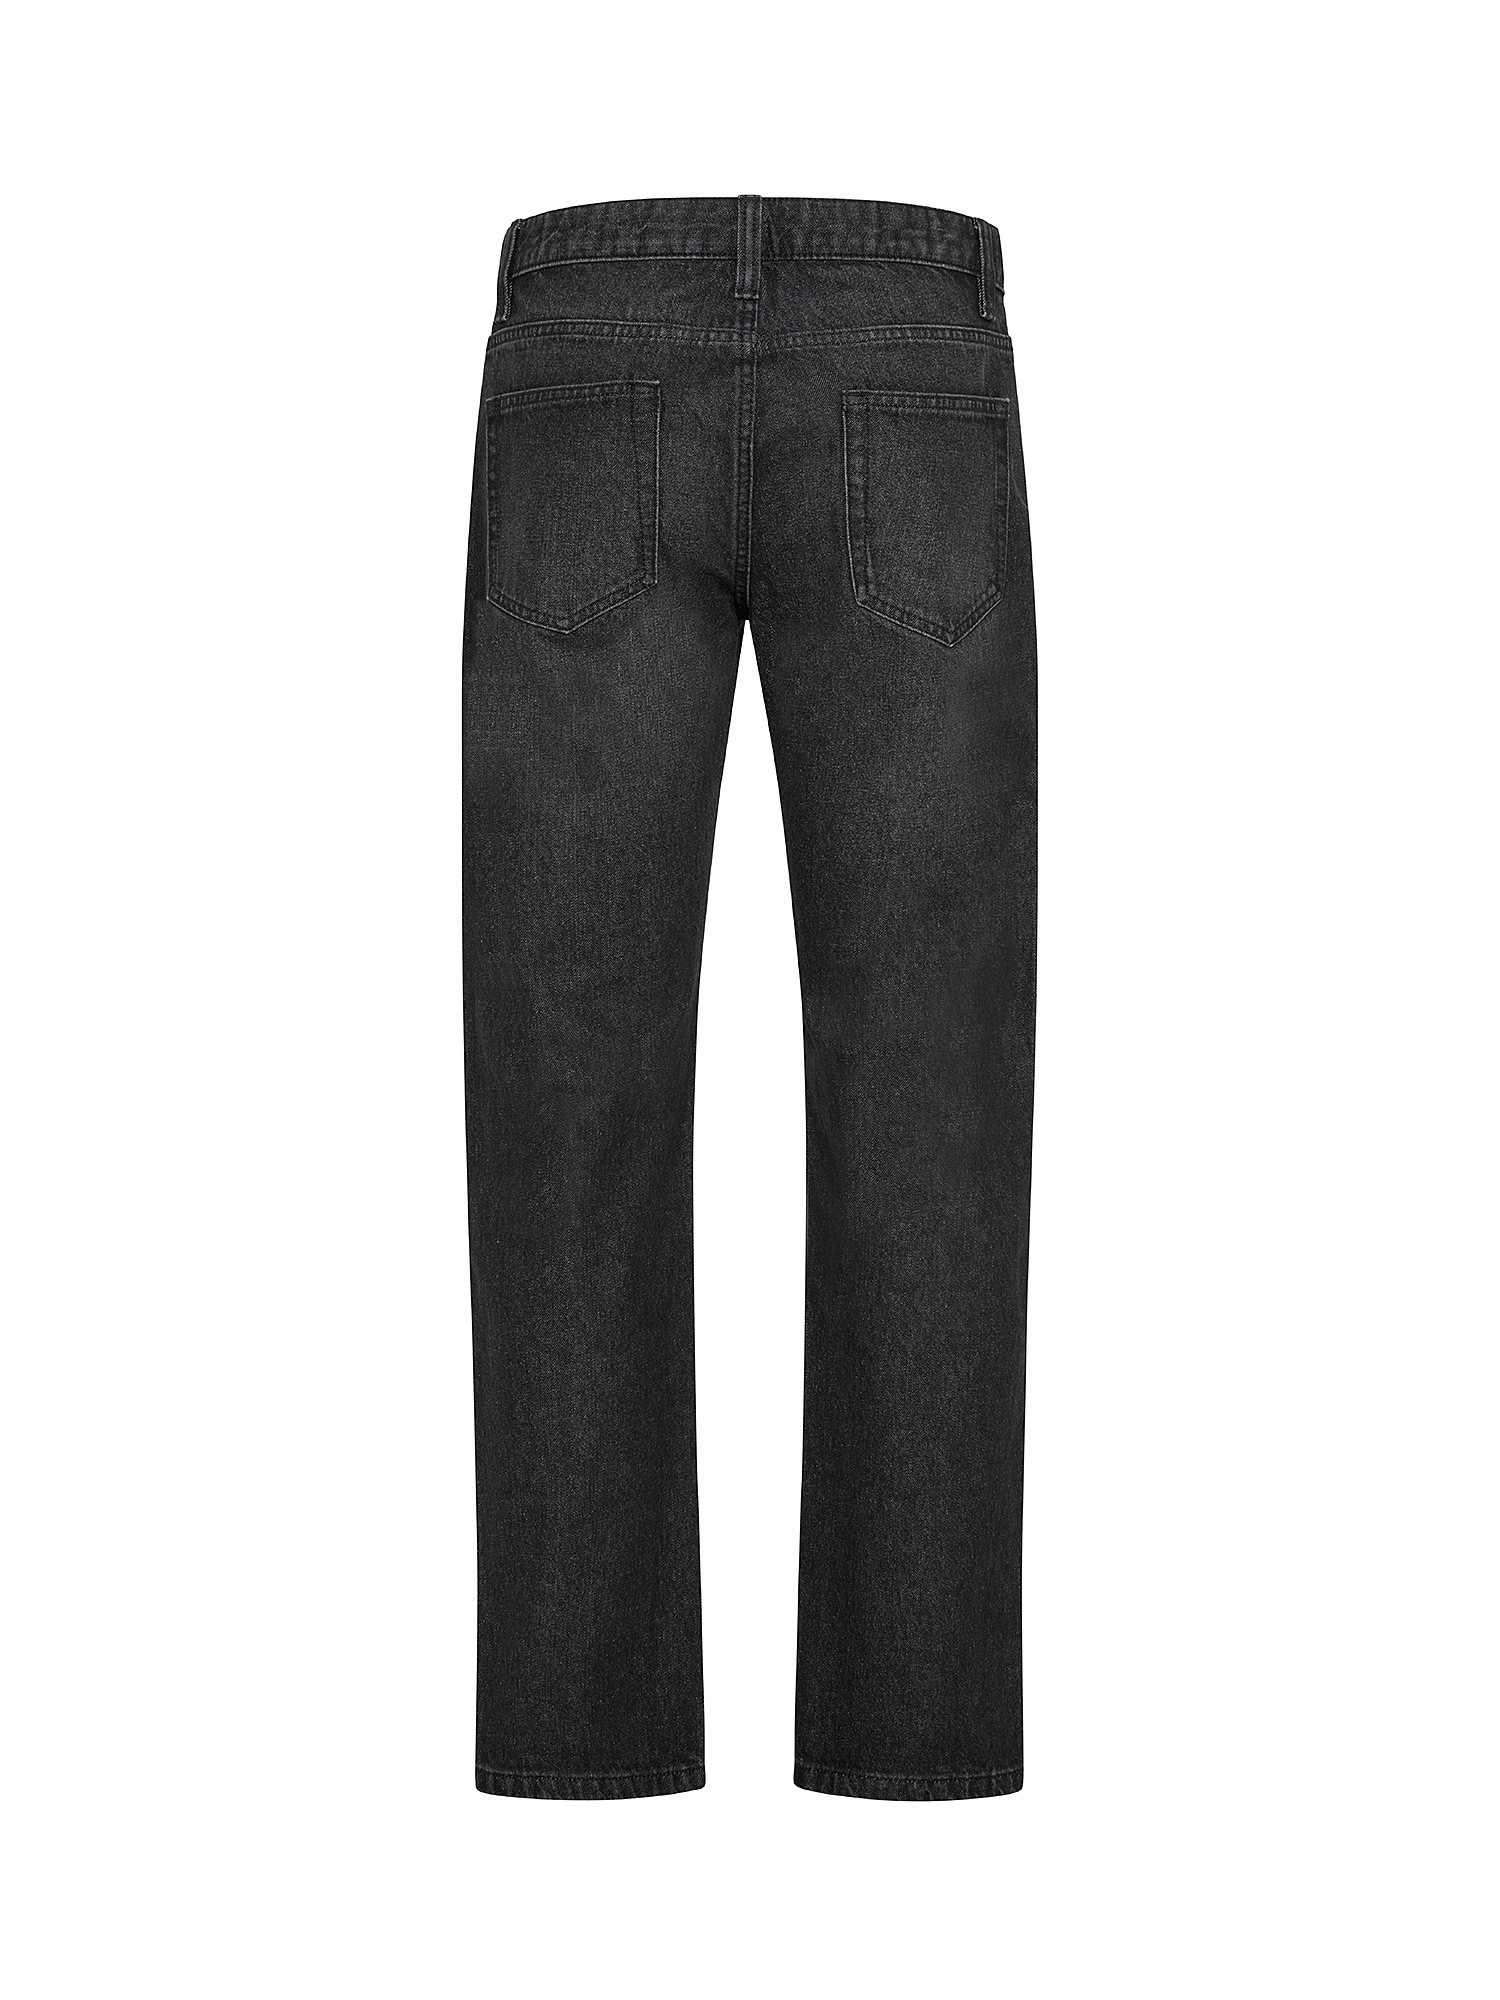 JCT - Five pocket jeans in pure cotton, Black, large image number 1